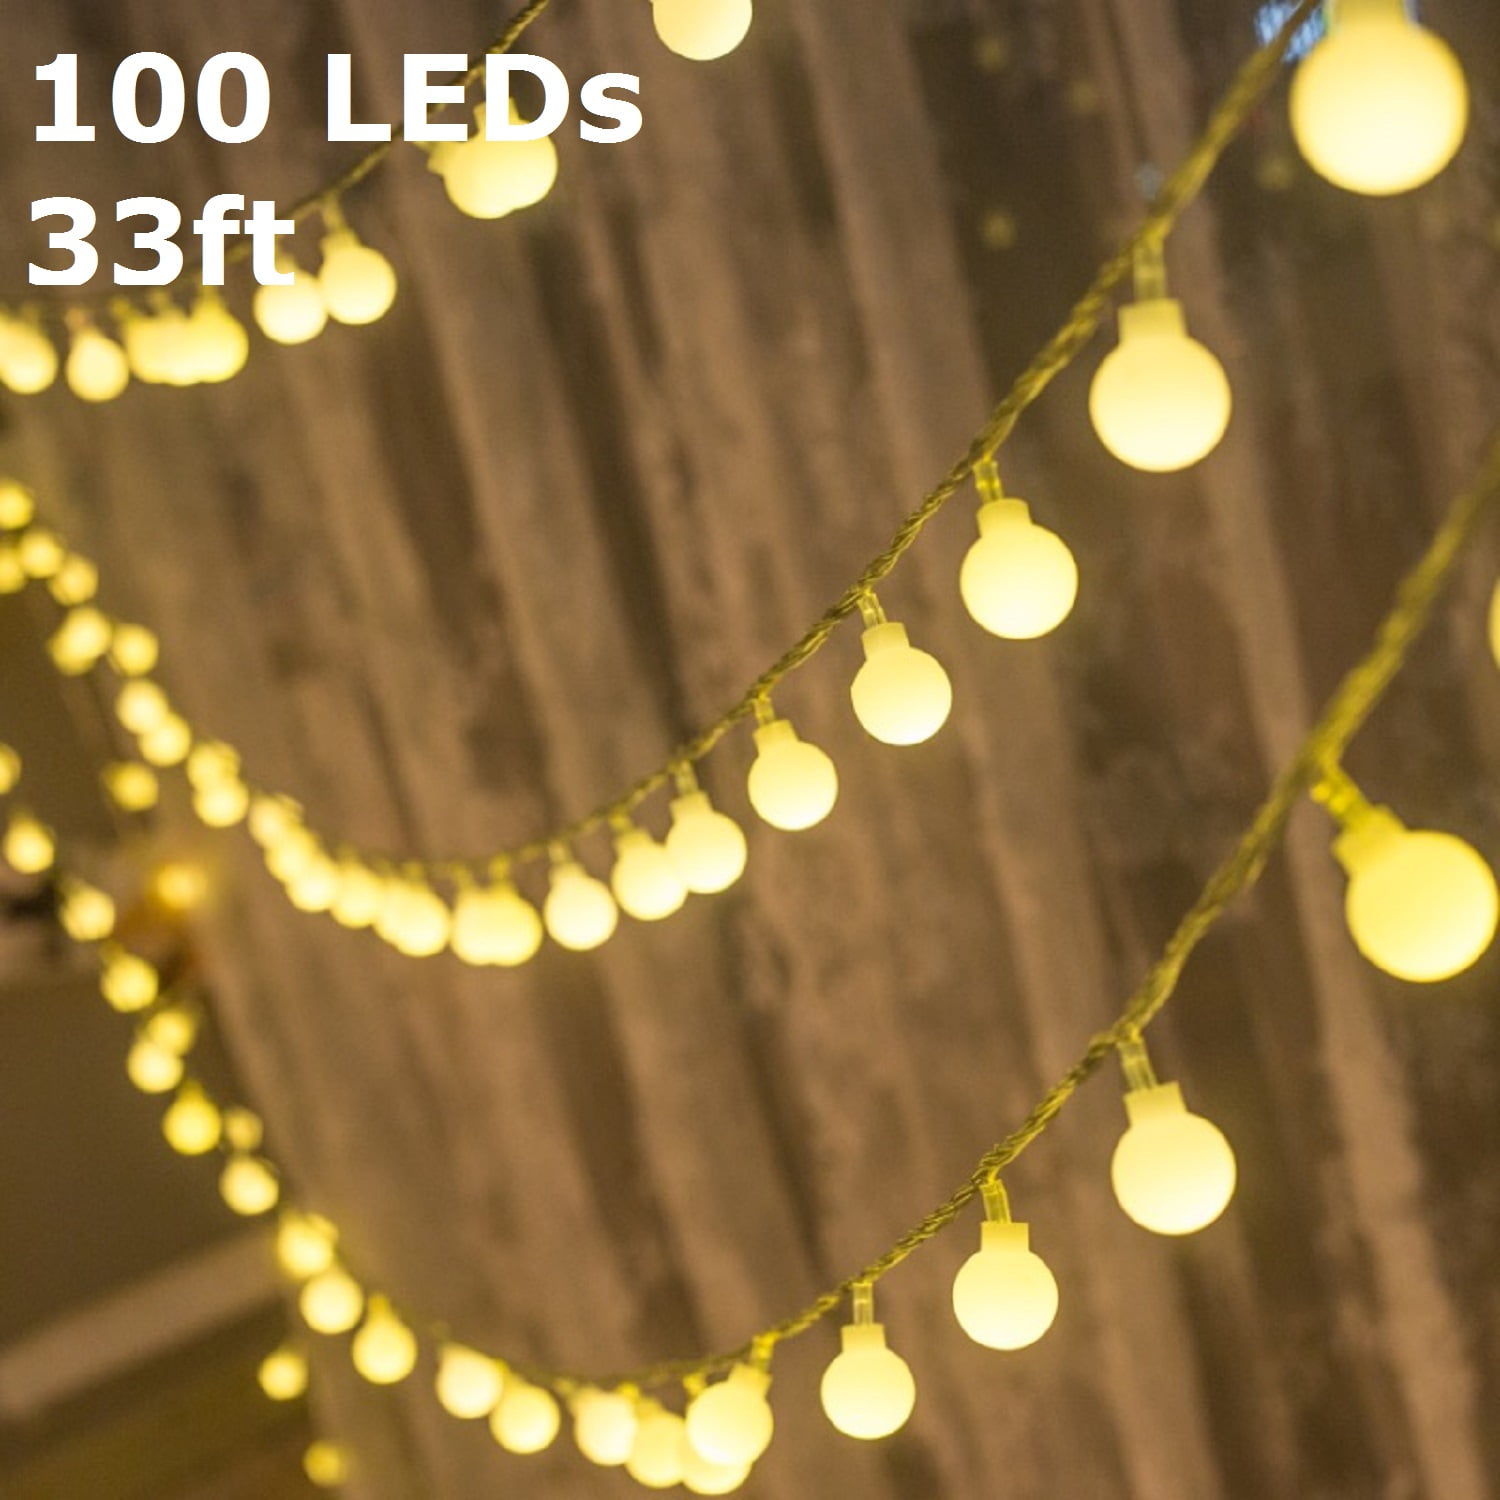 LED Christmas Lights COOL WHITE Exterior 100ft roll 300 LEDs 110V Outdoor String 